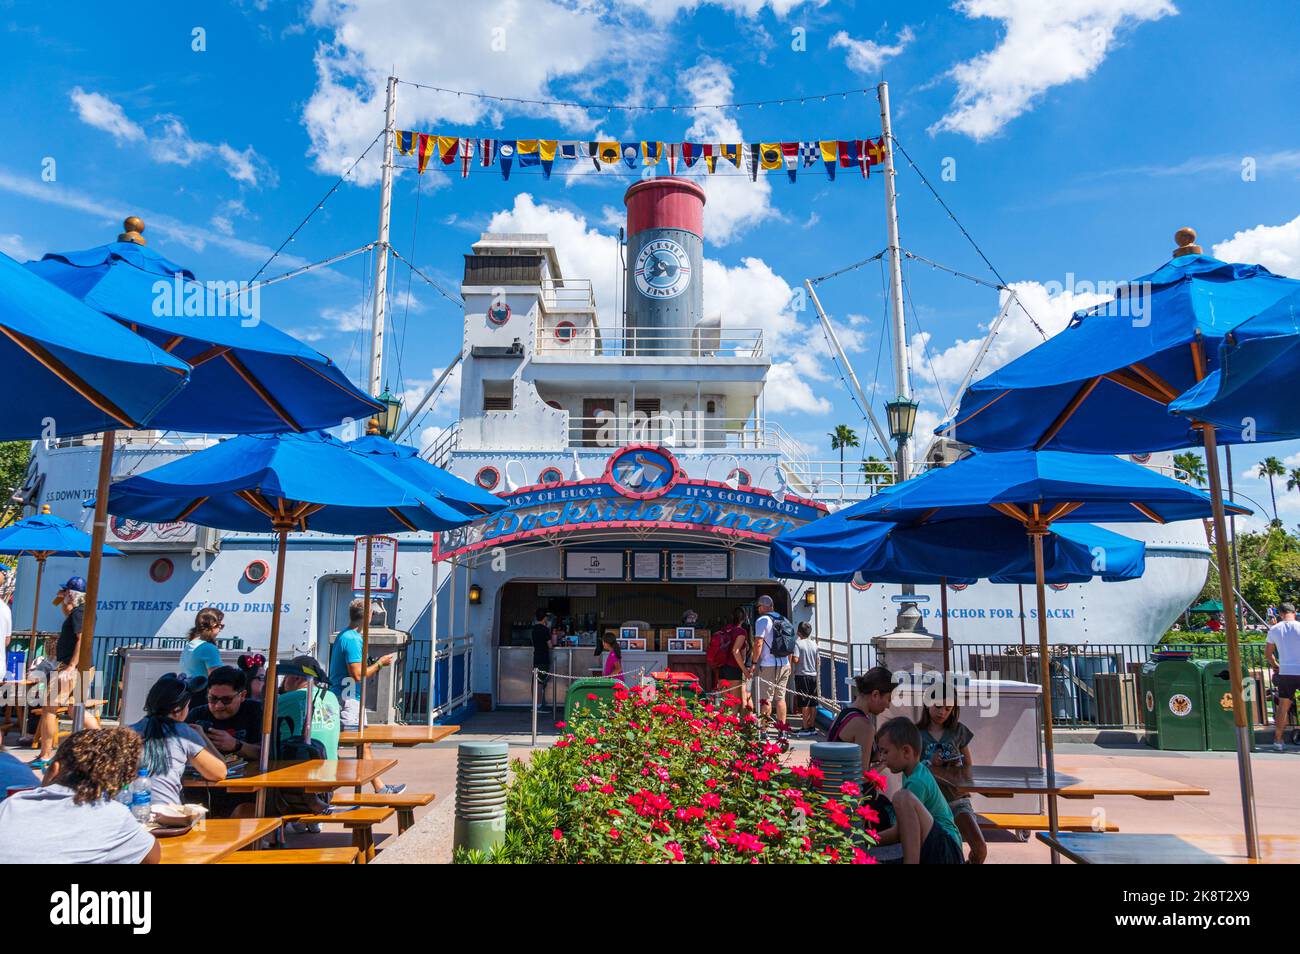 Dockside Diner quick service restaurant at Hollywood Studios - Walt Disney World Resort, Lake Buena Vista, Florida, USA Stock Photo